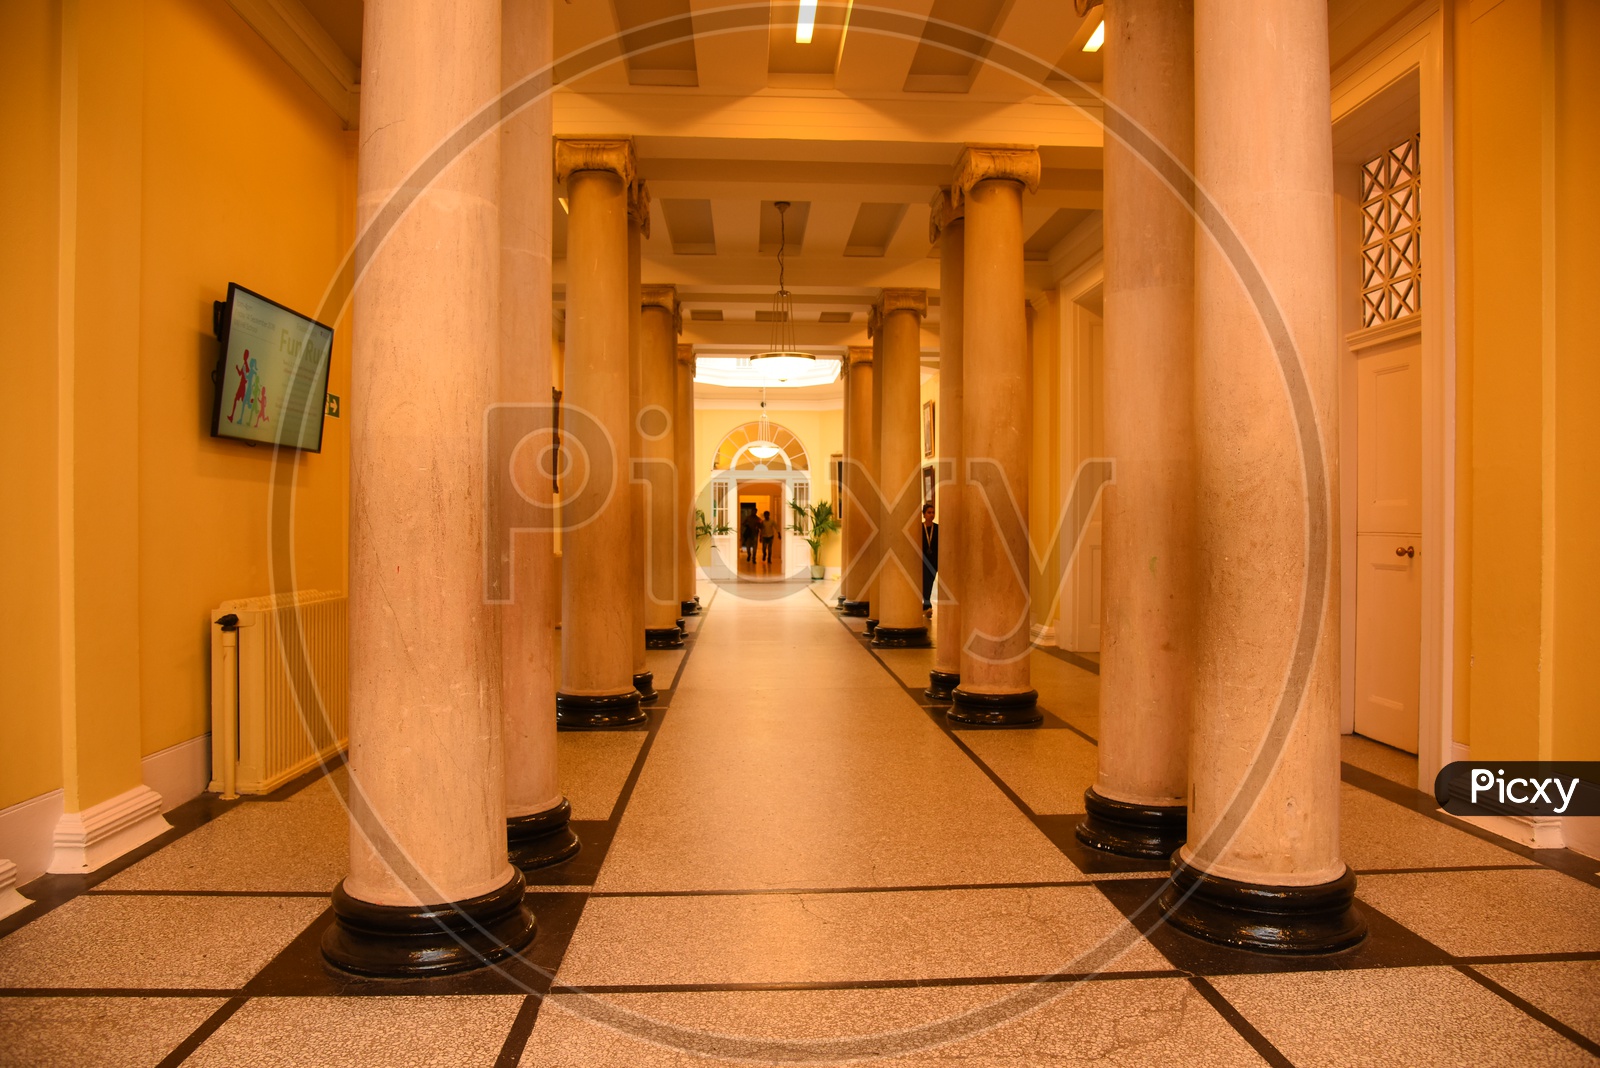 Corridor With Pillars